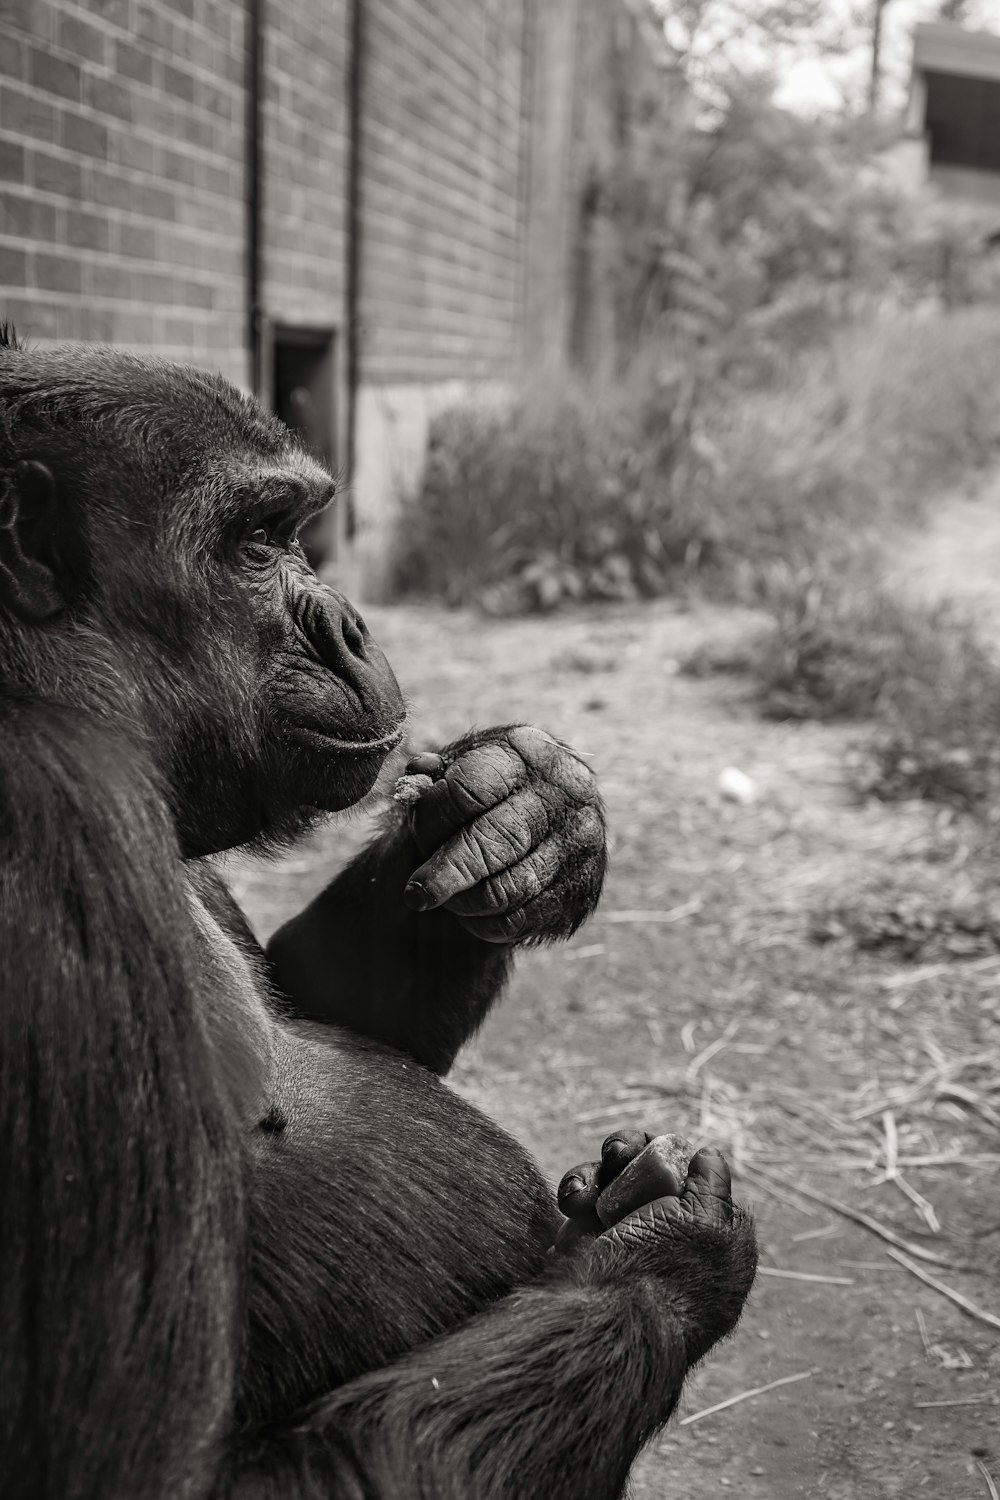 a black and white photo of a gorilla